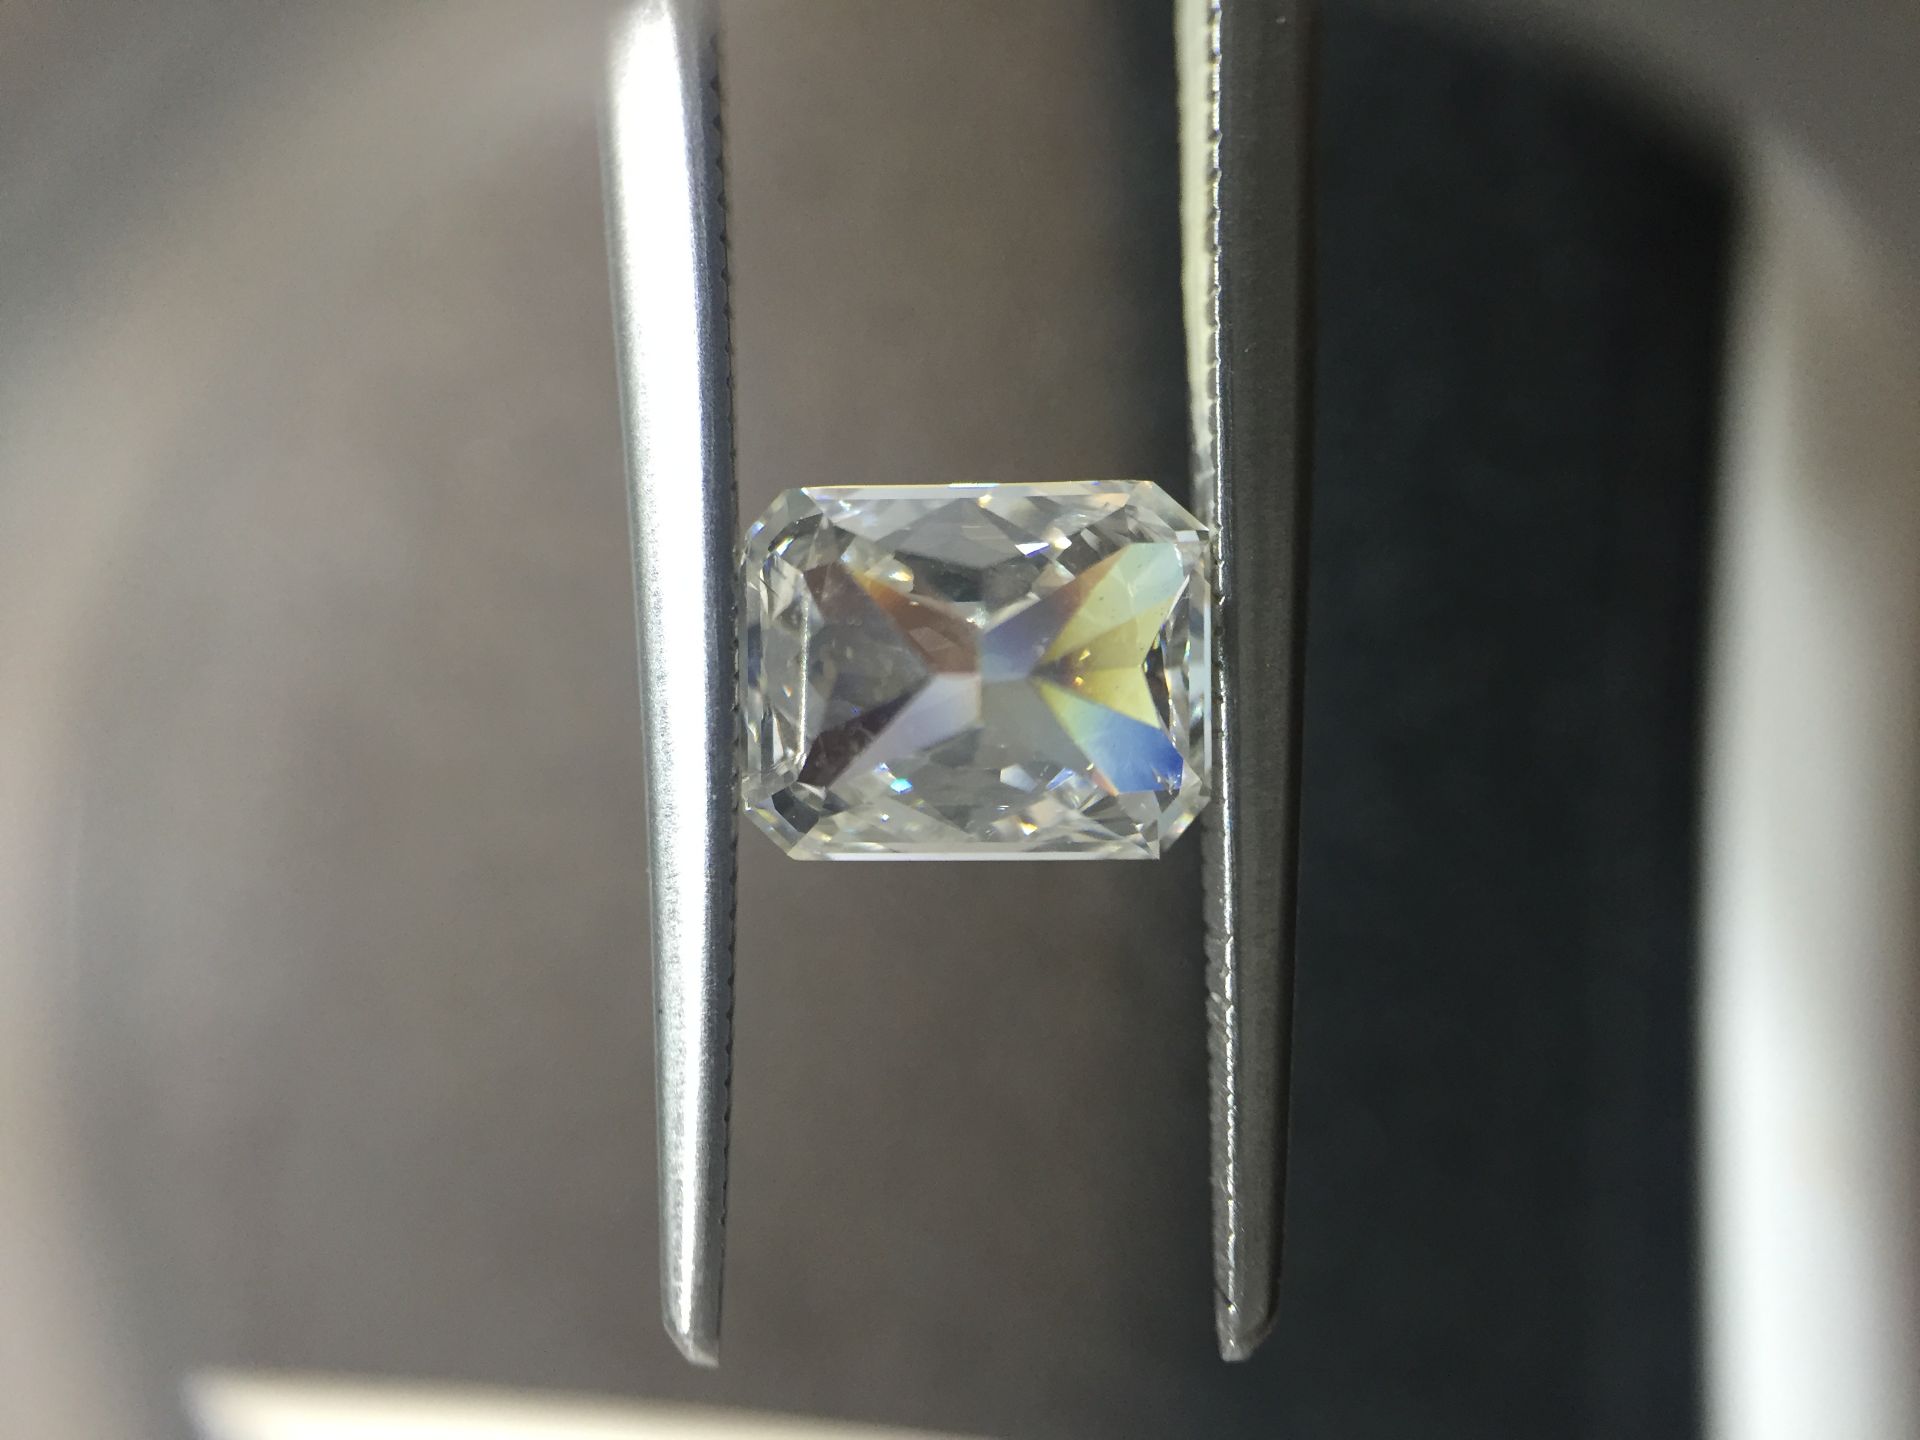 1.20ct radiant cut diamond. I colour, VS2 clarity. GIA certification - 1239966530 . 7.20 x 5.75 x